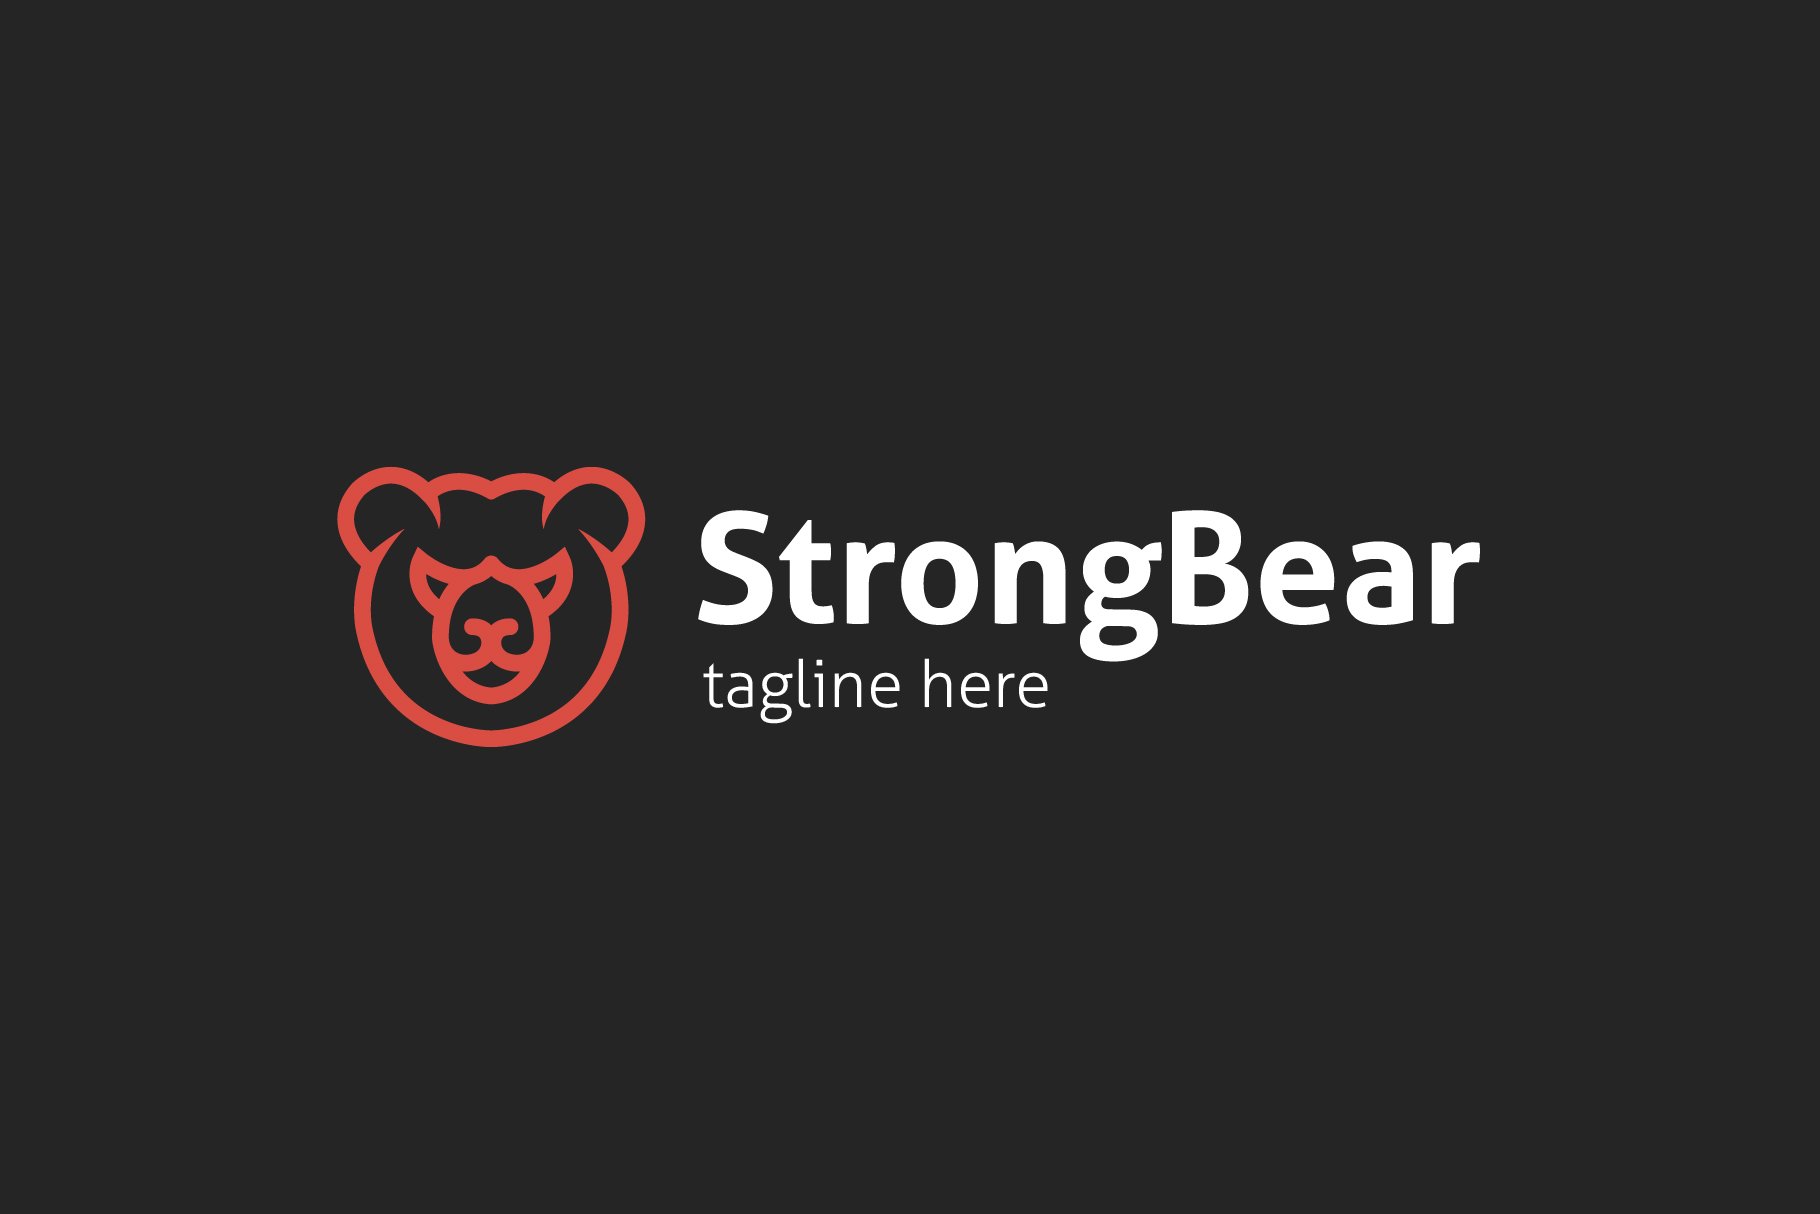 Strong Bear Logo cover image.